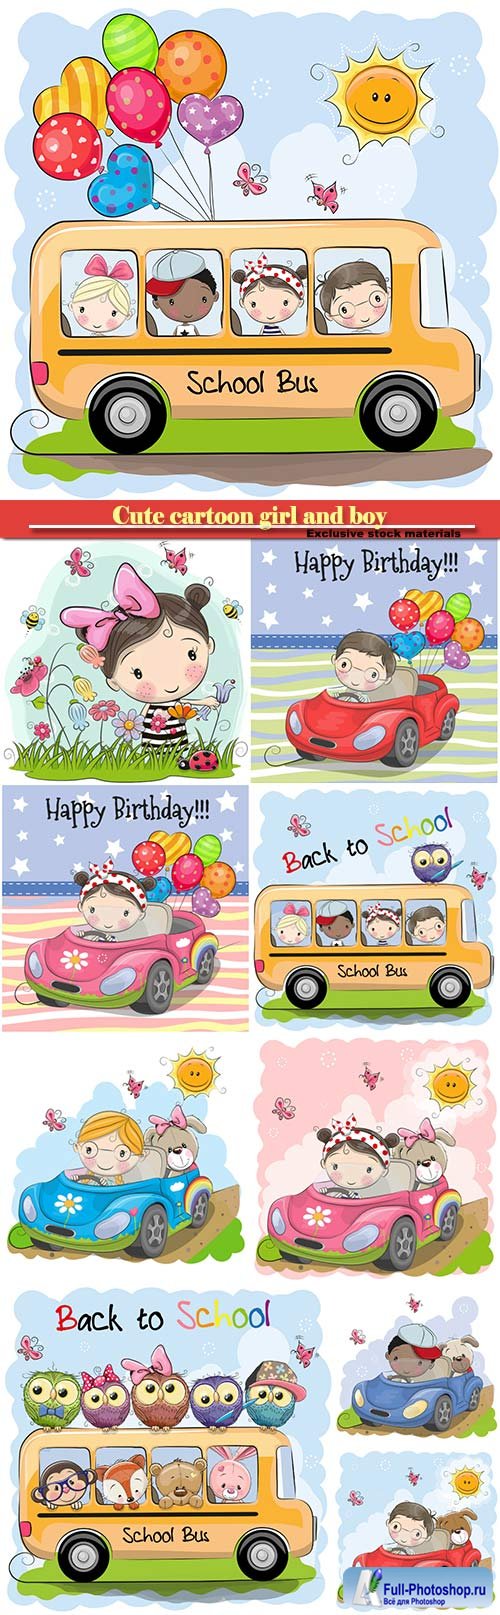 Cute cartoon girl and boy with balloon goes on a car